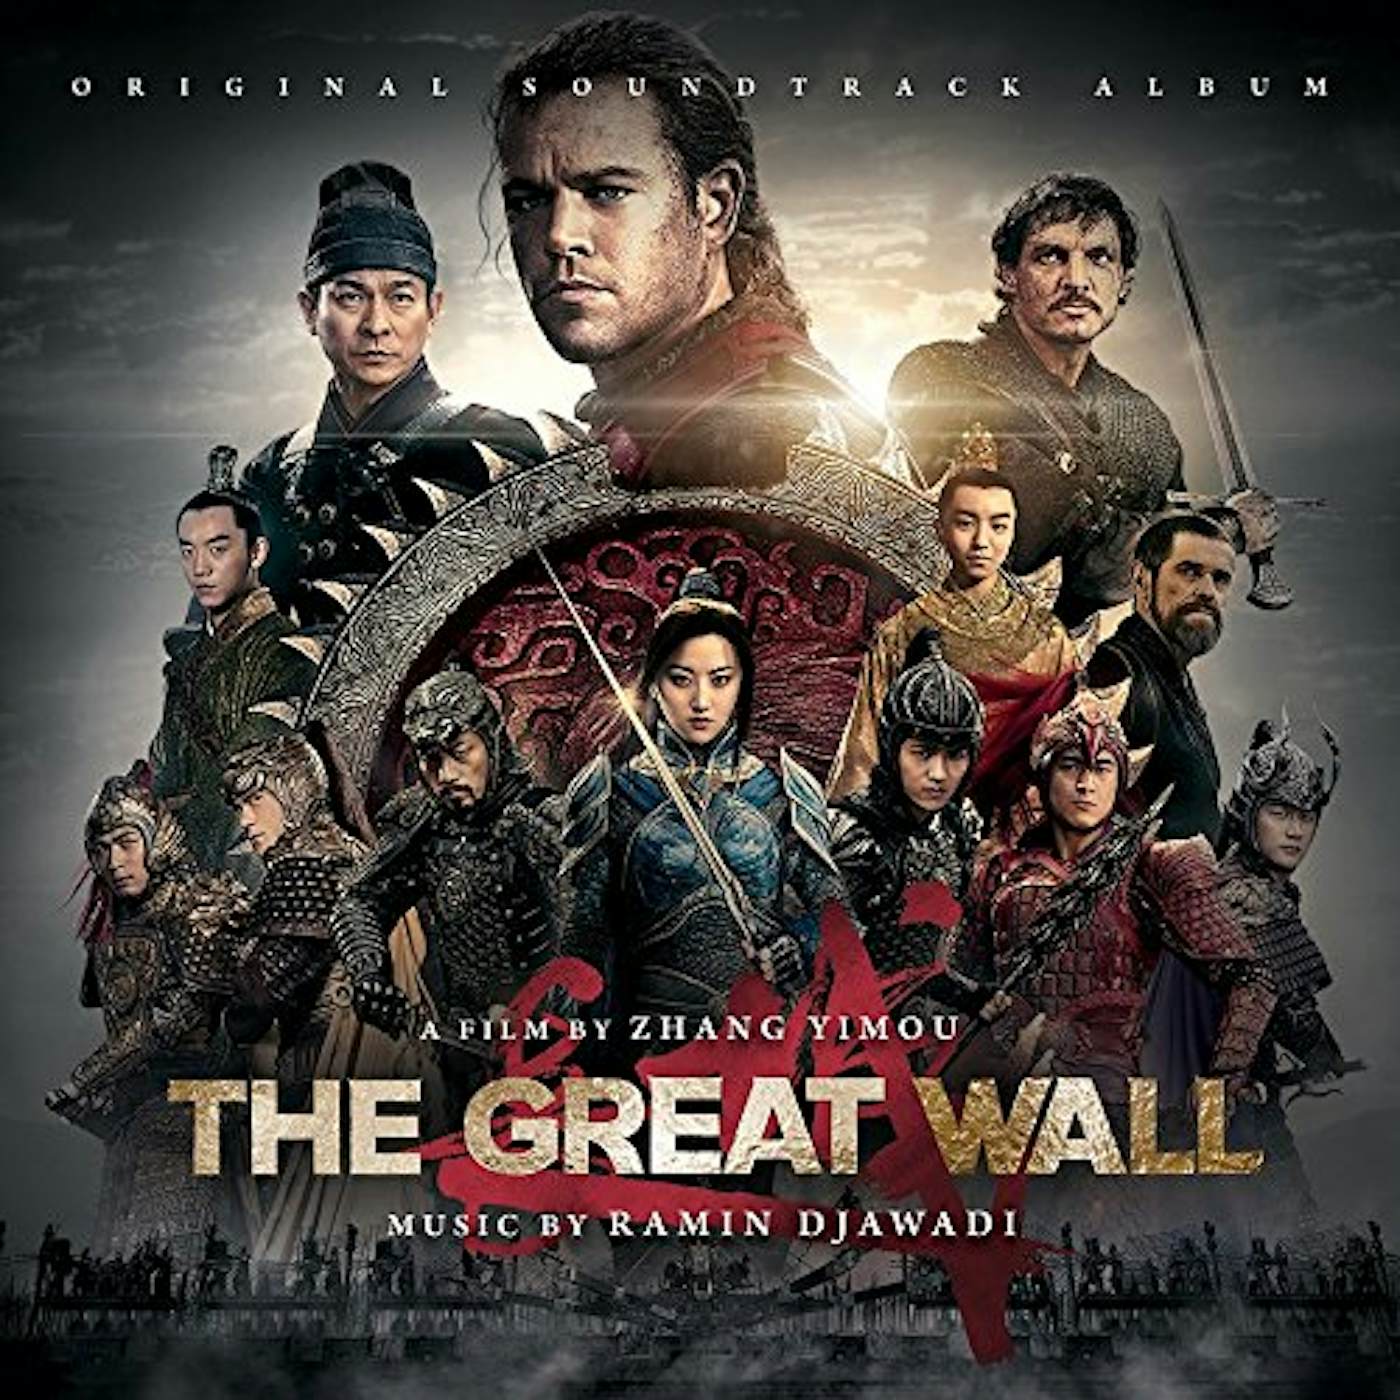 Ramin Djawadi GREAT WALL / Original Soundtrack Vinyl Record